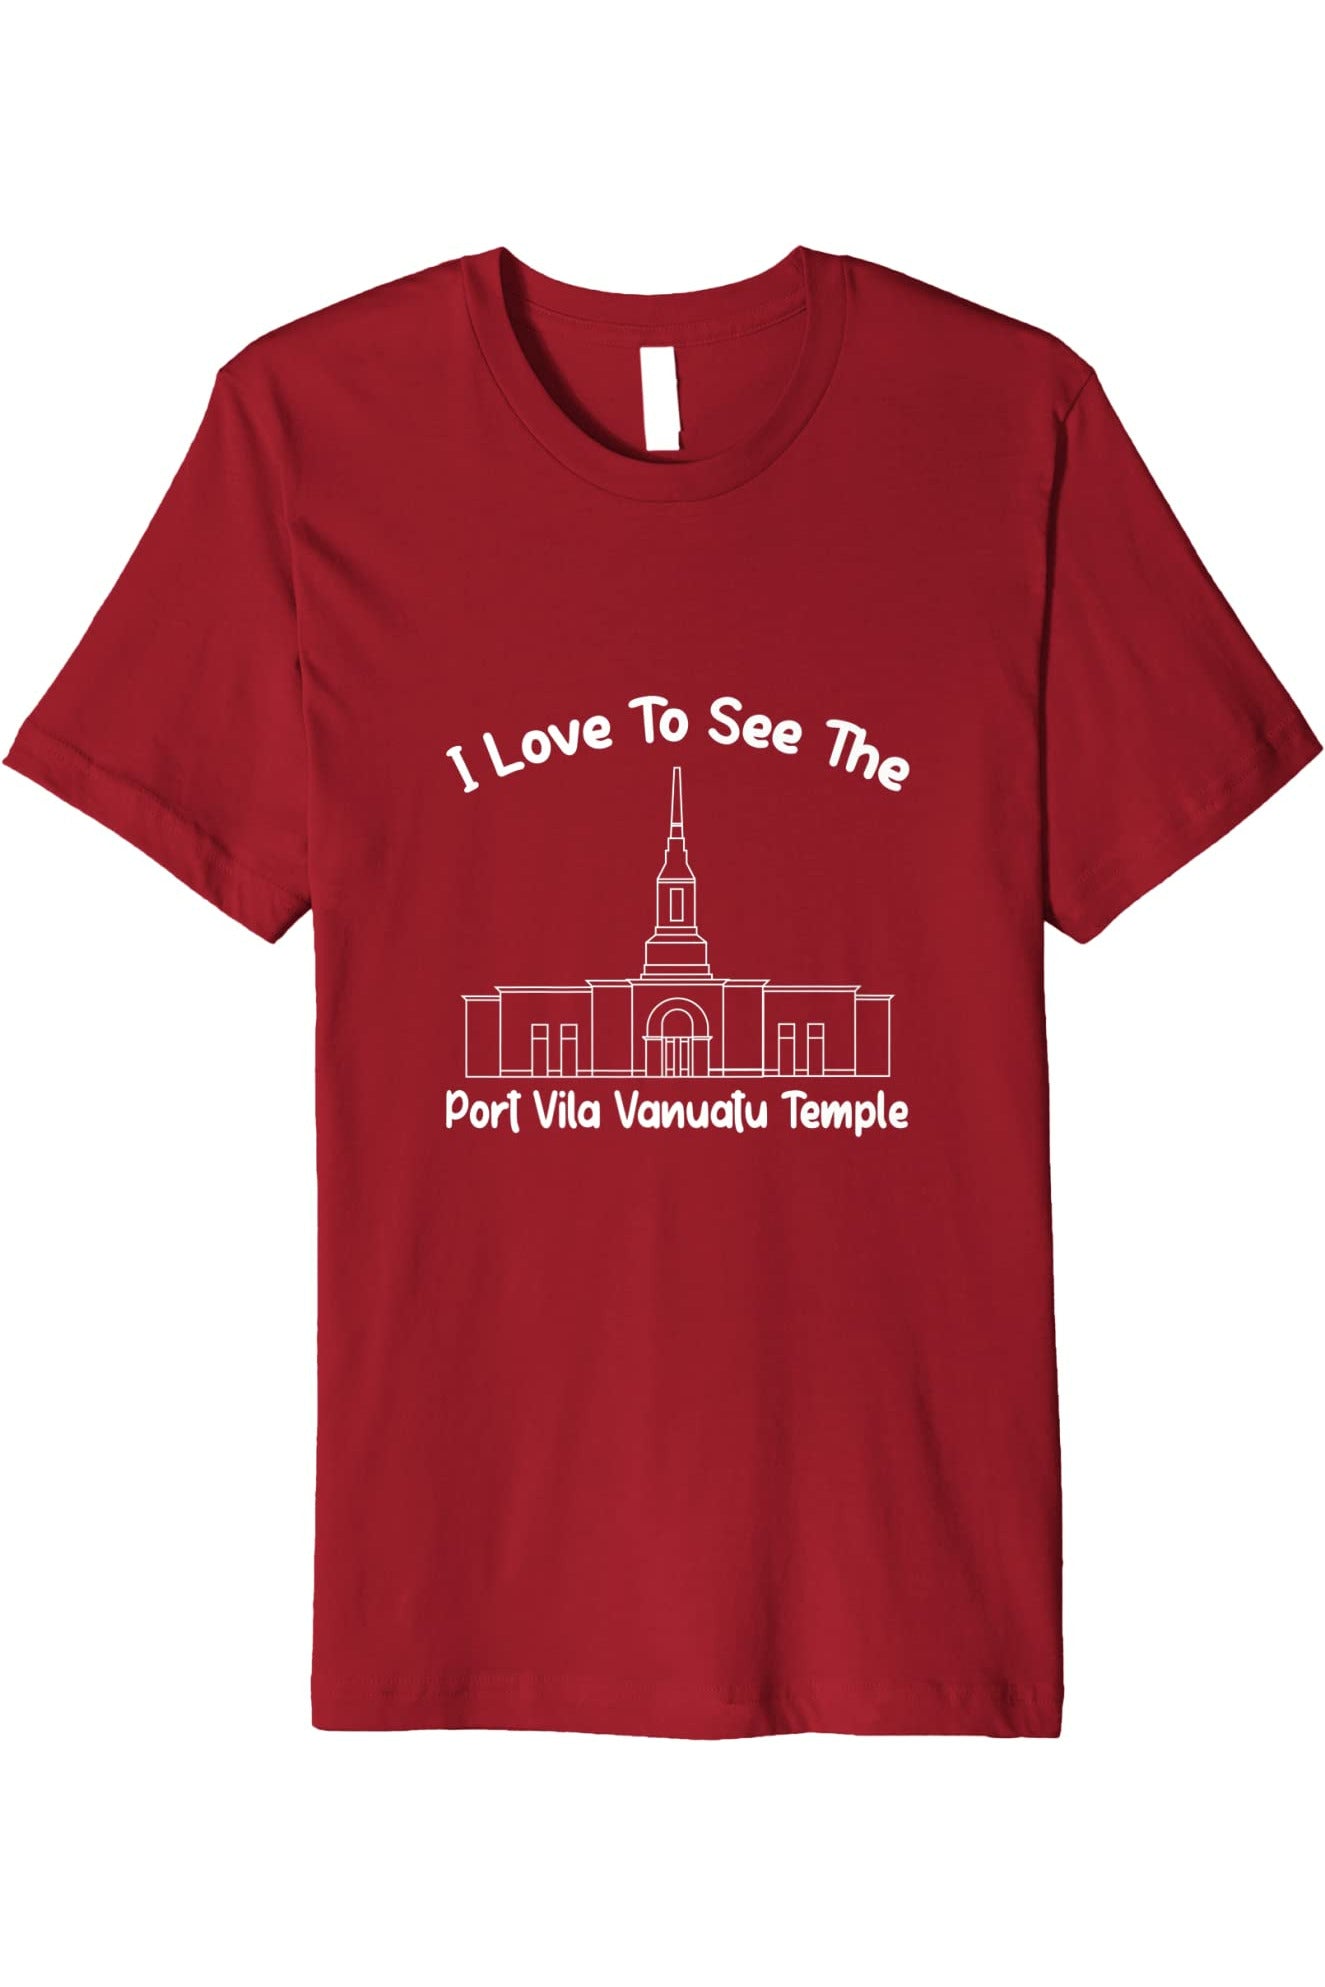 Port Vila Vanuatu Temple T-Shirt - Premium - Primary Style (English) US